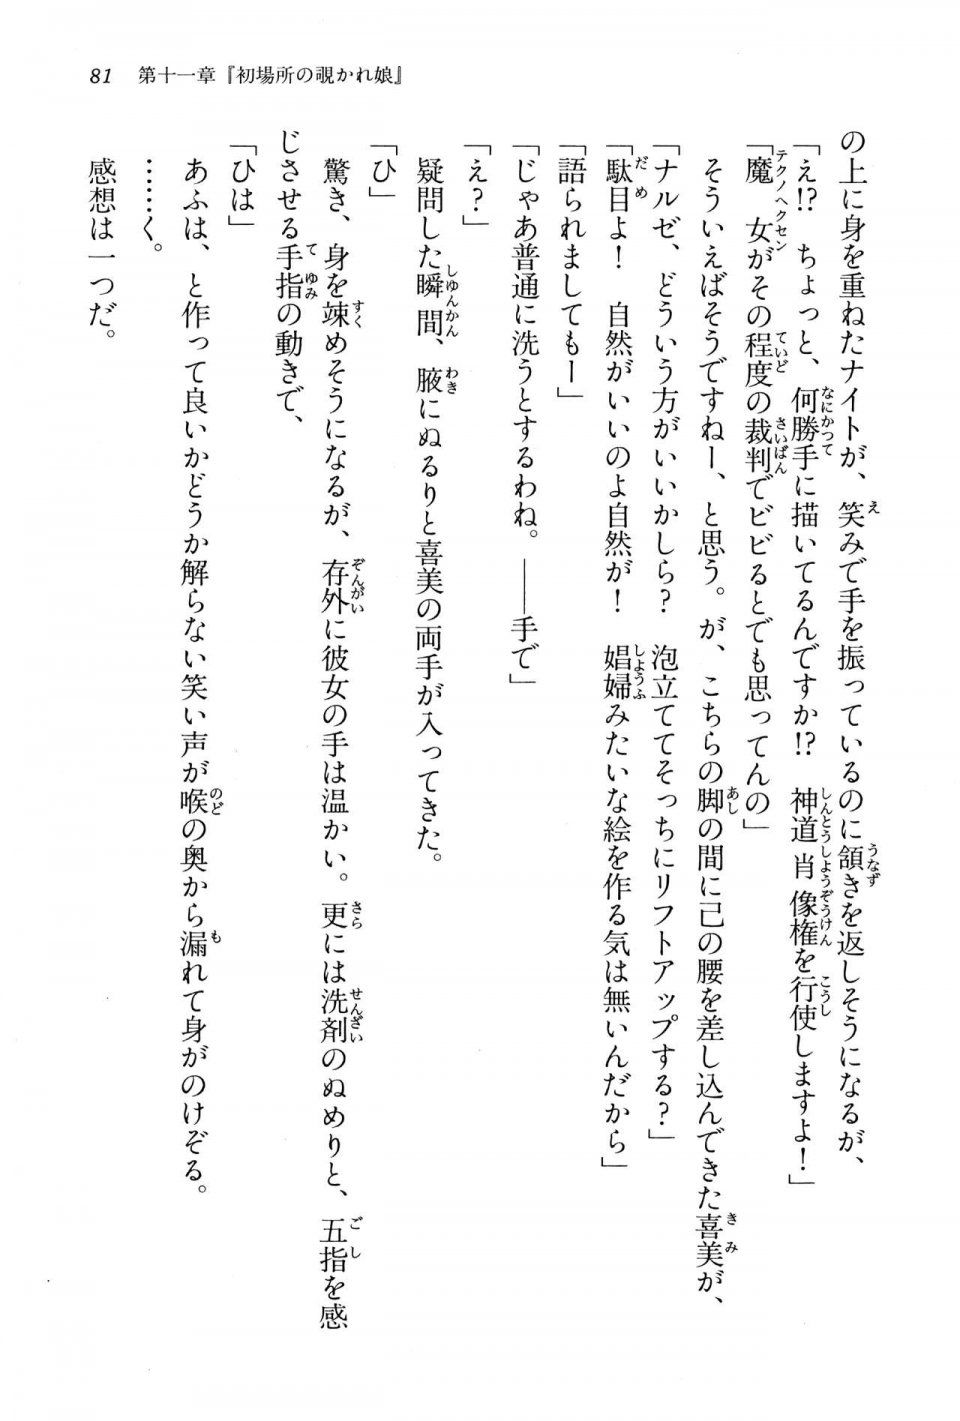 Kyoukai Senjou no Horizon BD Special Mininovel Vol 3(2A) - Photo #85